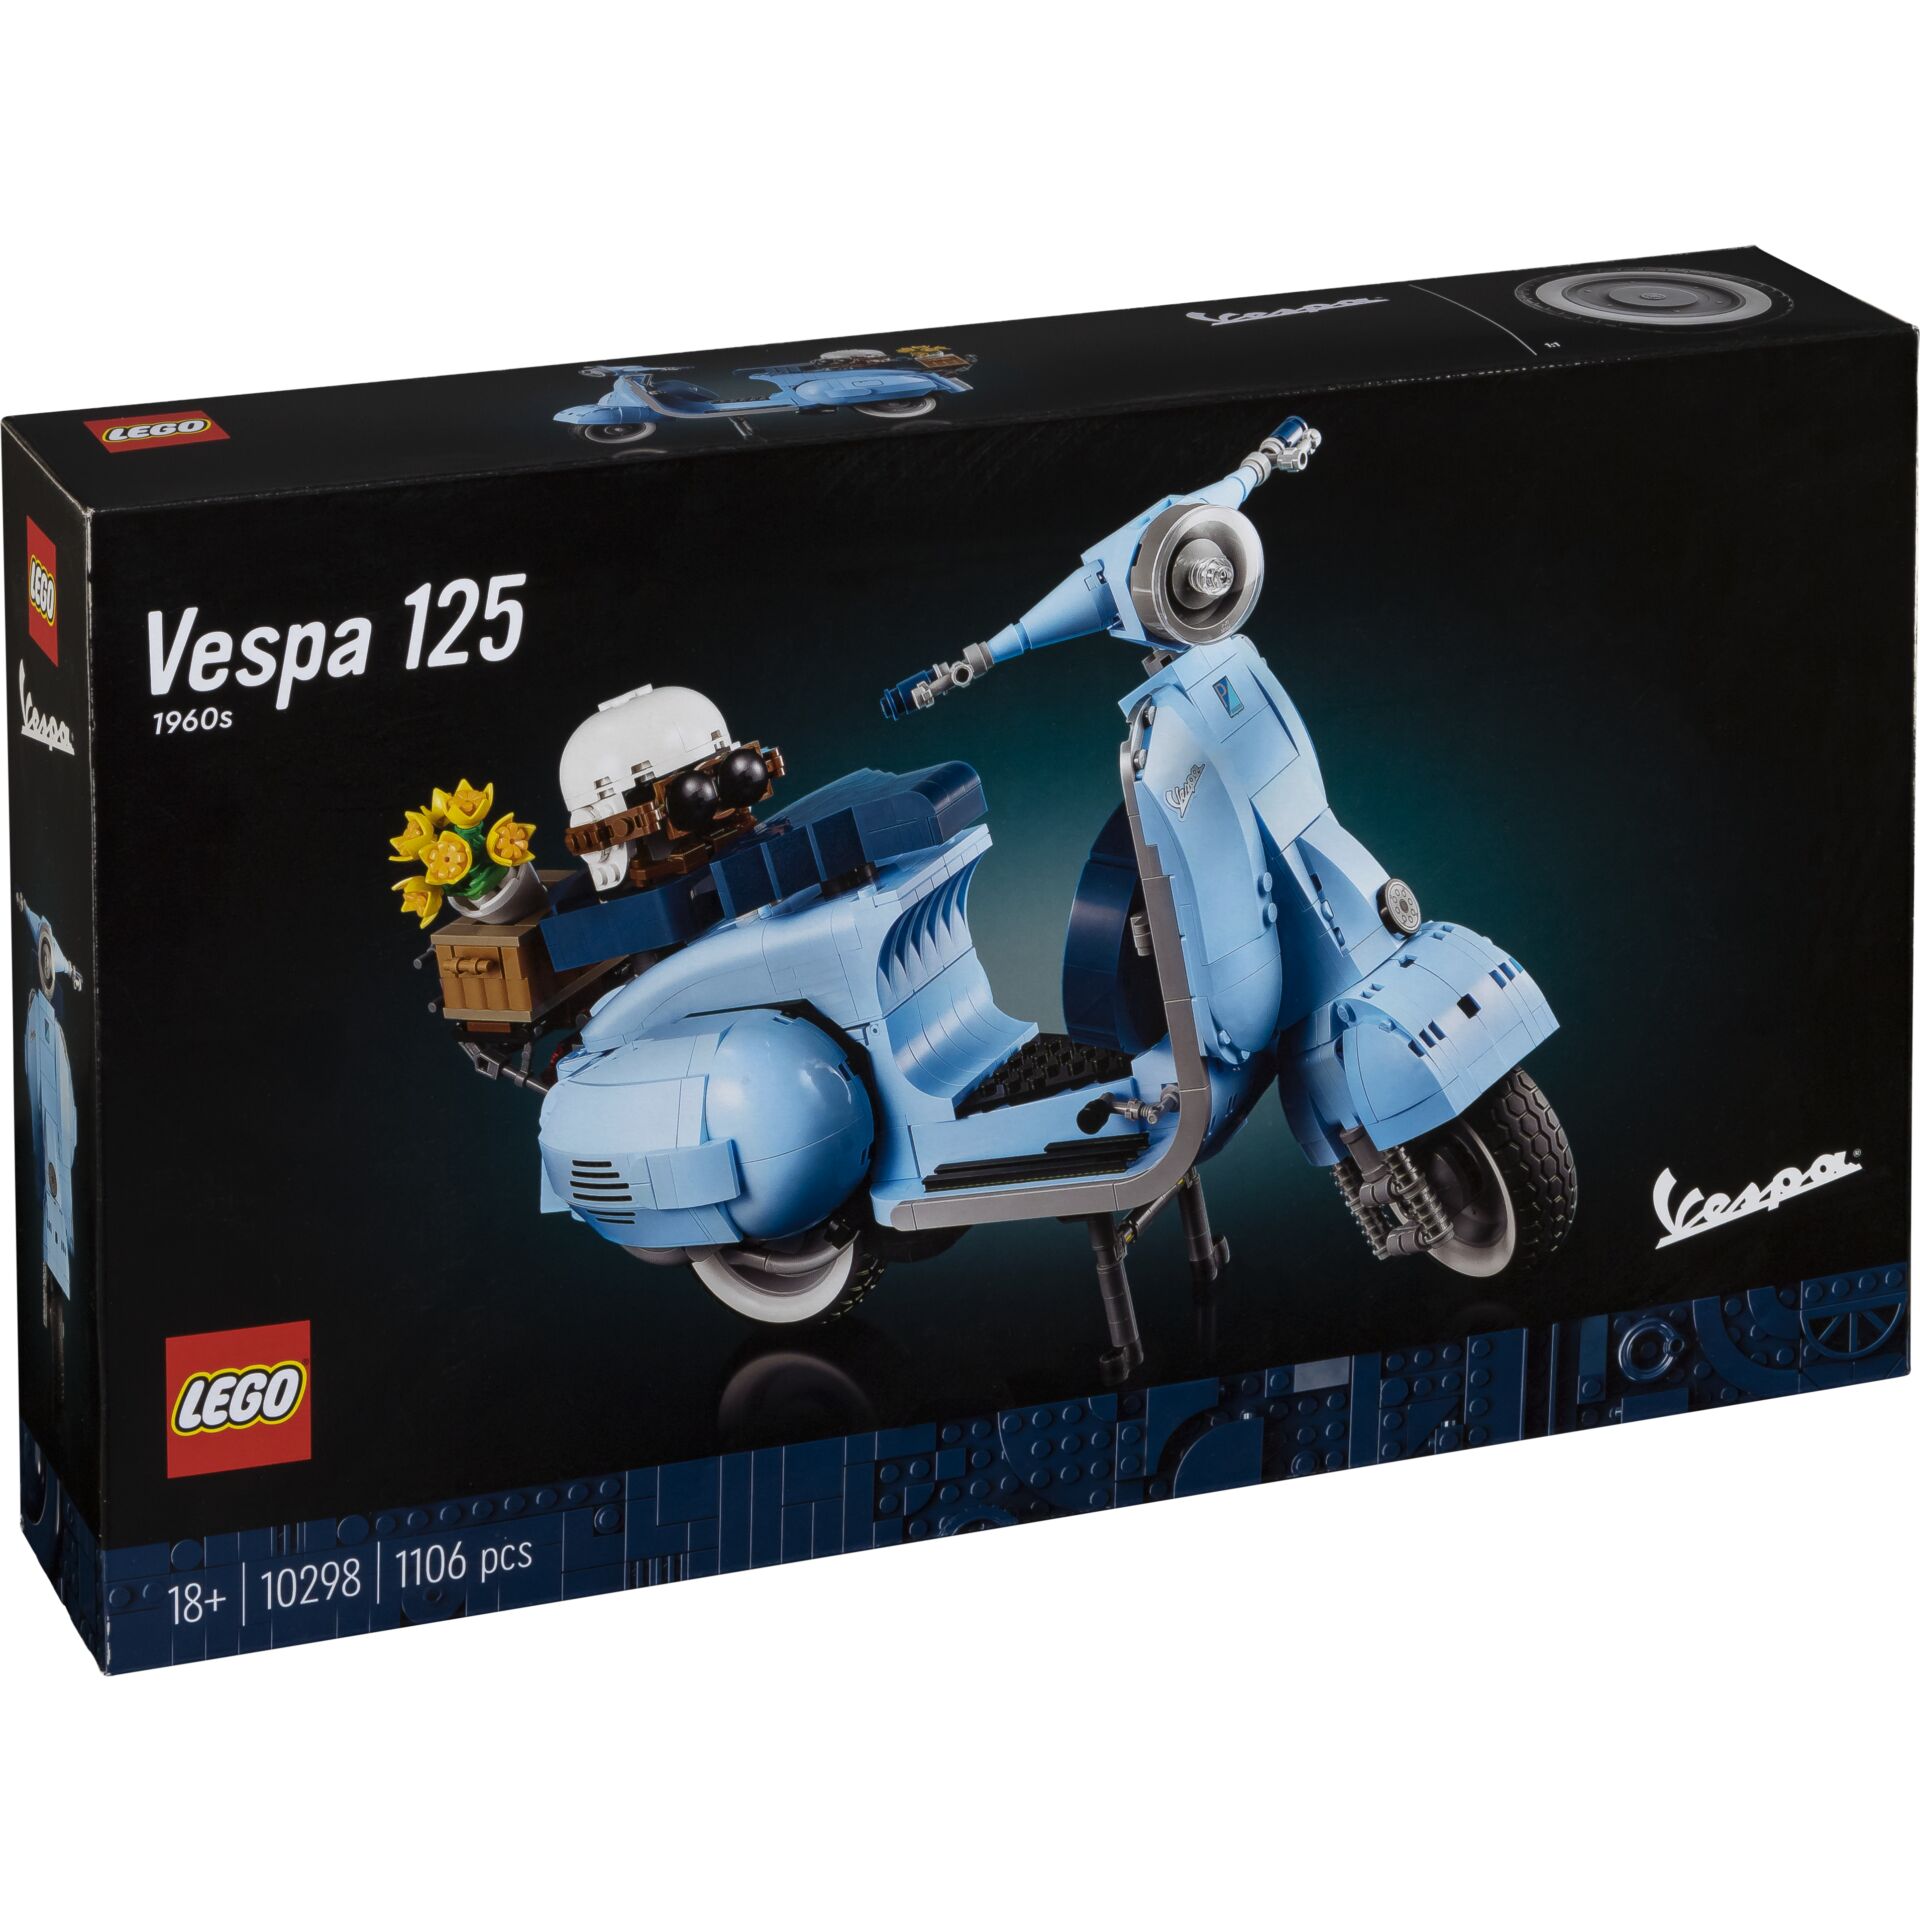 LEGO Creator Expert - Vespa 125 